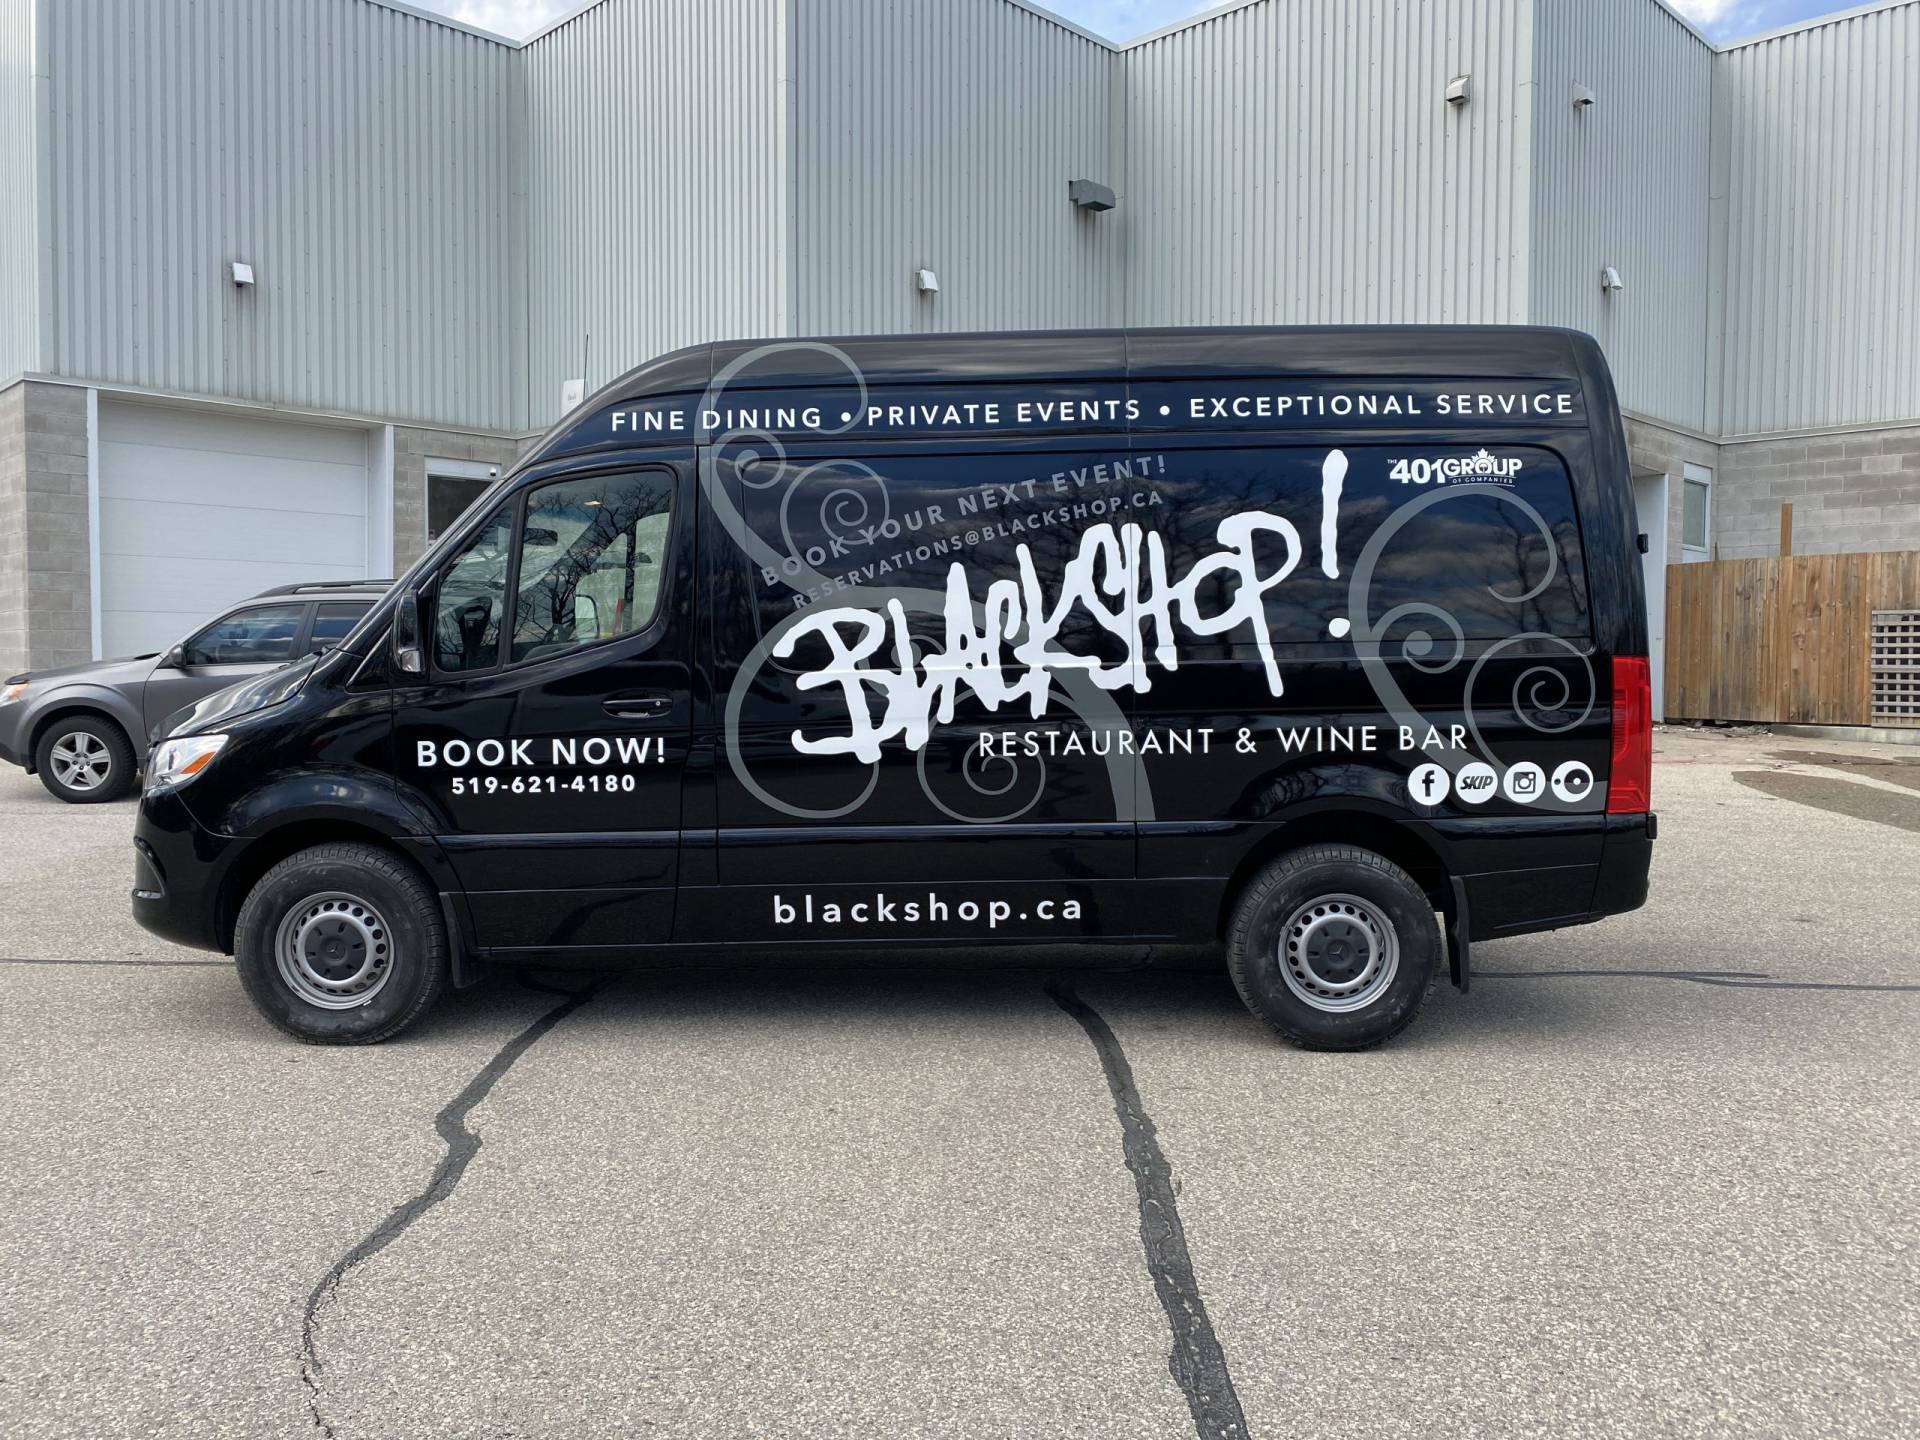 Blackshop Restaurant & Wine Bar Ontario - Vehicle Graphics & Branding